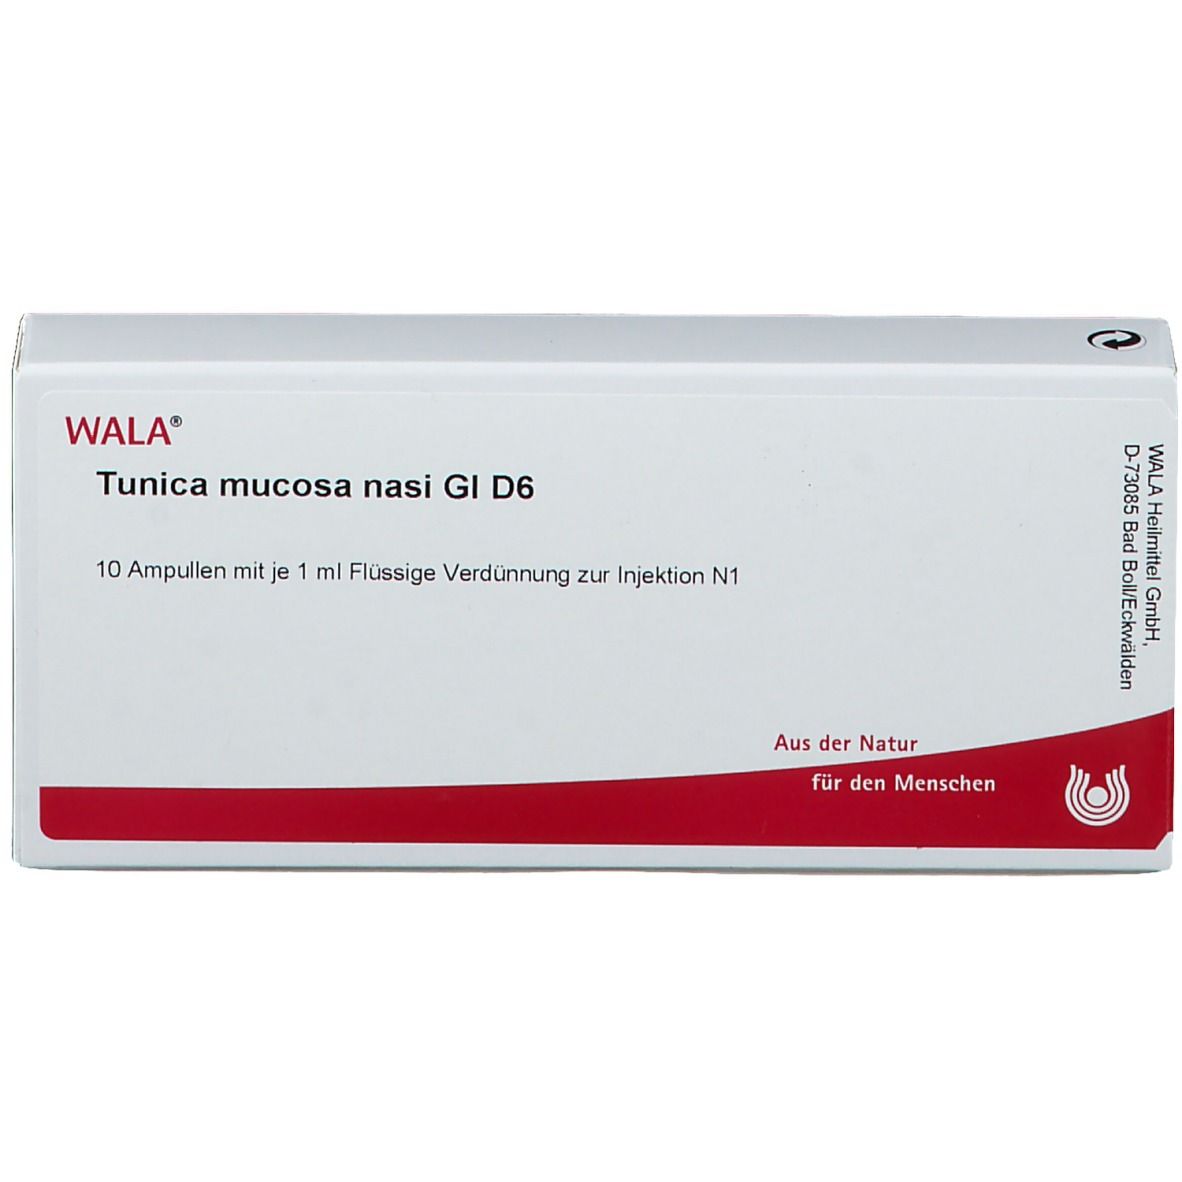 WALA® Tunica mucosa nasi Gl D 6